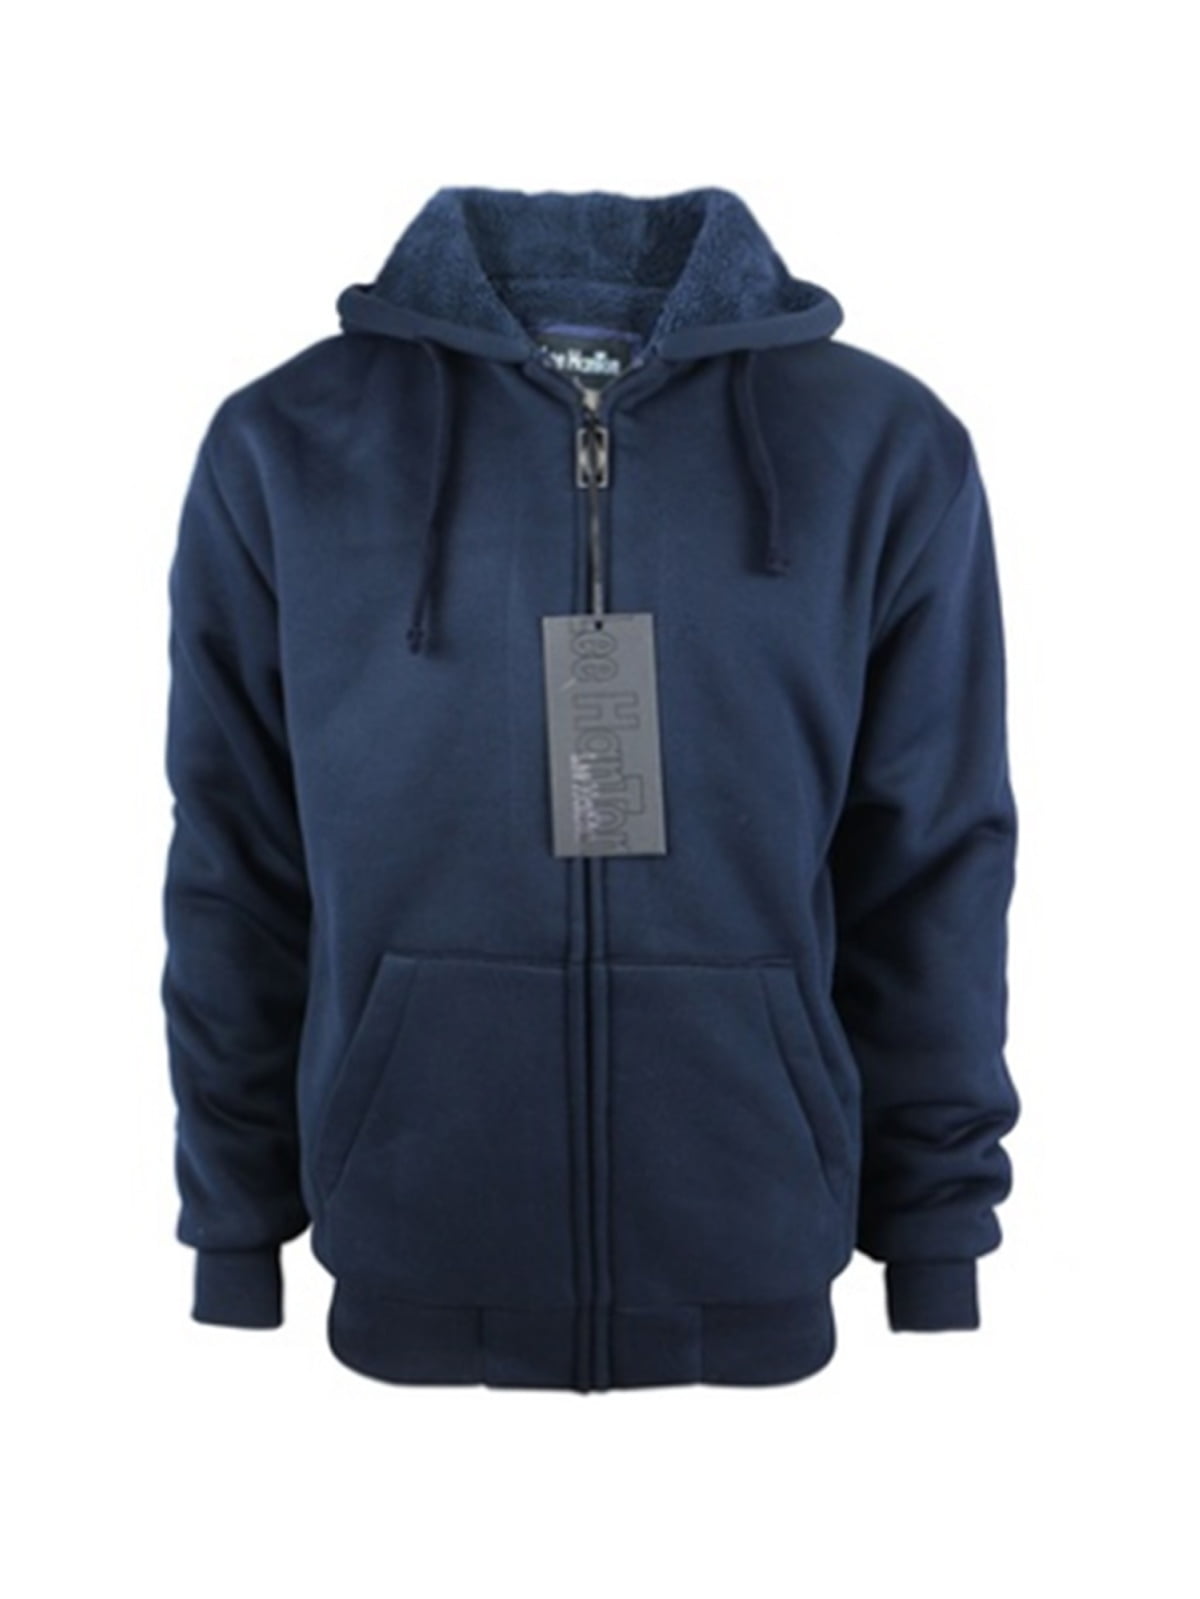 LeeHanTon Mens Sherpa Lined Fleece Zip Up Winter Warm Plaid Flannel Jacket with Hood 